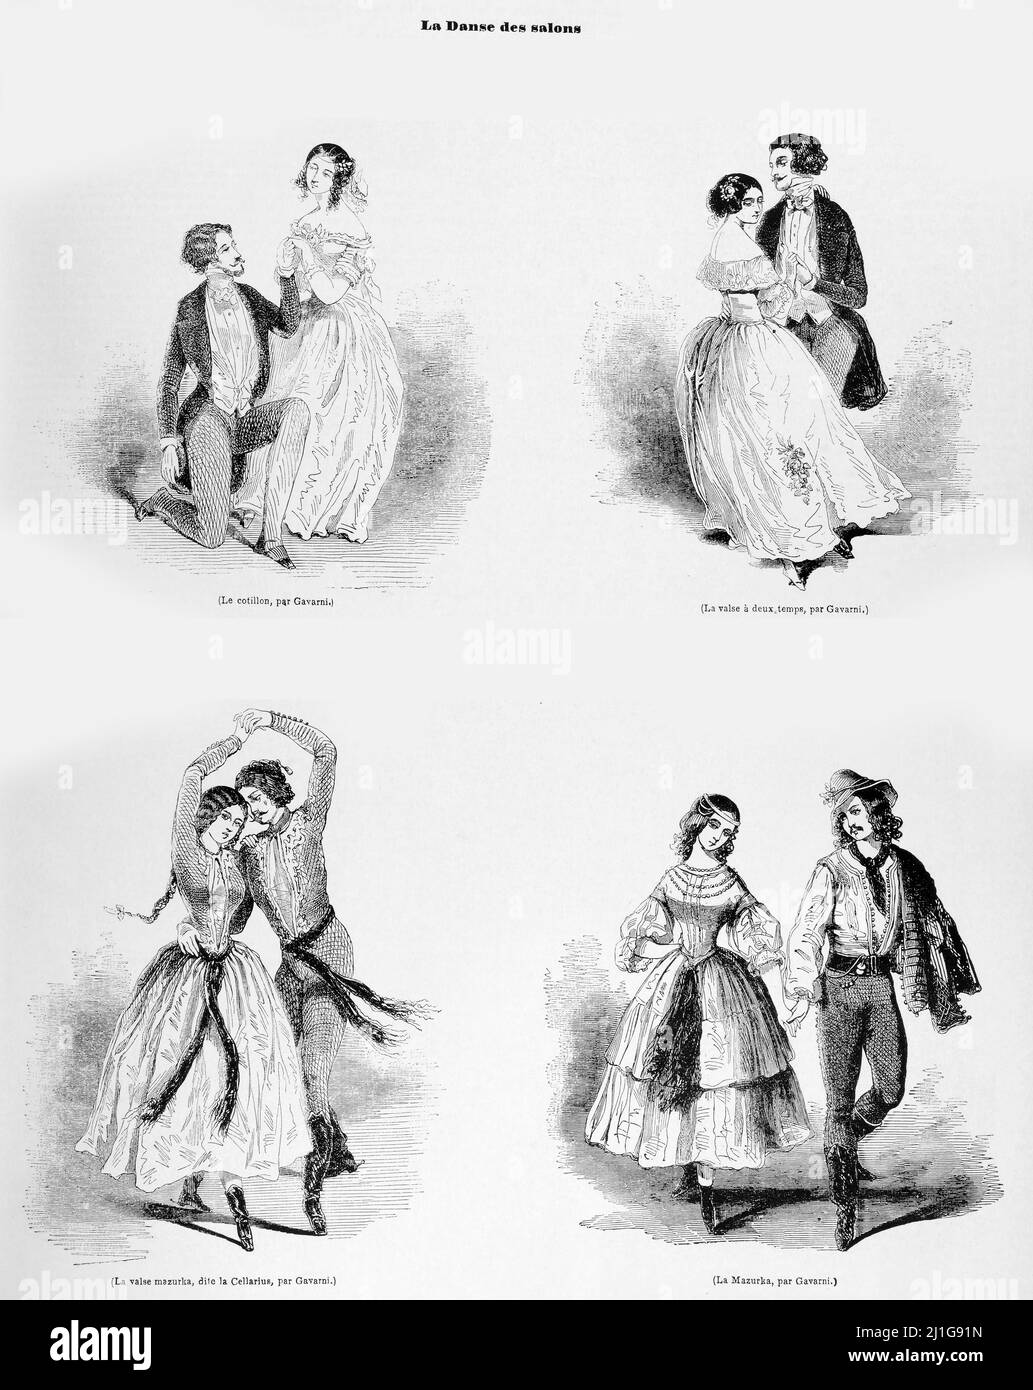 Eng translation : " "The Ballroom Dance (Le cotillion, by Gavarni,) (La valse à deux temps, by Gavarni.) (La valse mazurka, dit la Cellarius, by Gavarni.) (La Mazurka, by Gavarni.)" " - Original in French : " La Danse des salons (Le cotillon, par Gavarni,) (La valse à deux temps, par Gavarni.) (La valse mazurka, dite la Cellarius, par Gavarni.) (La Mazurka, par Gavarni.) " - Extract from "L'Illustration Journal Universel" - French illustrated magazine - 1846 Stock Photo